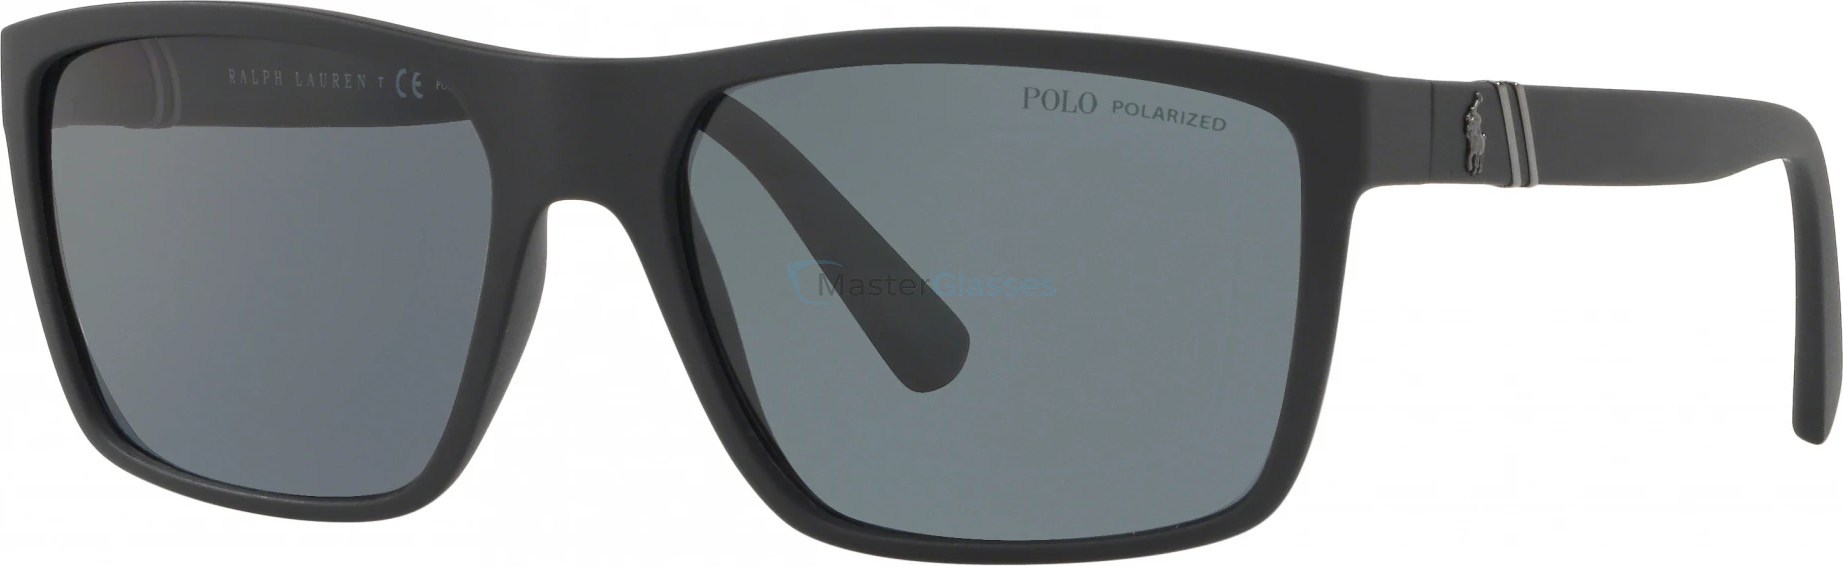 Polo Ralph Lauren PH4133 528481 Polarized